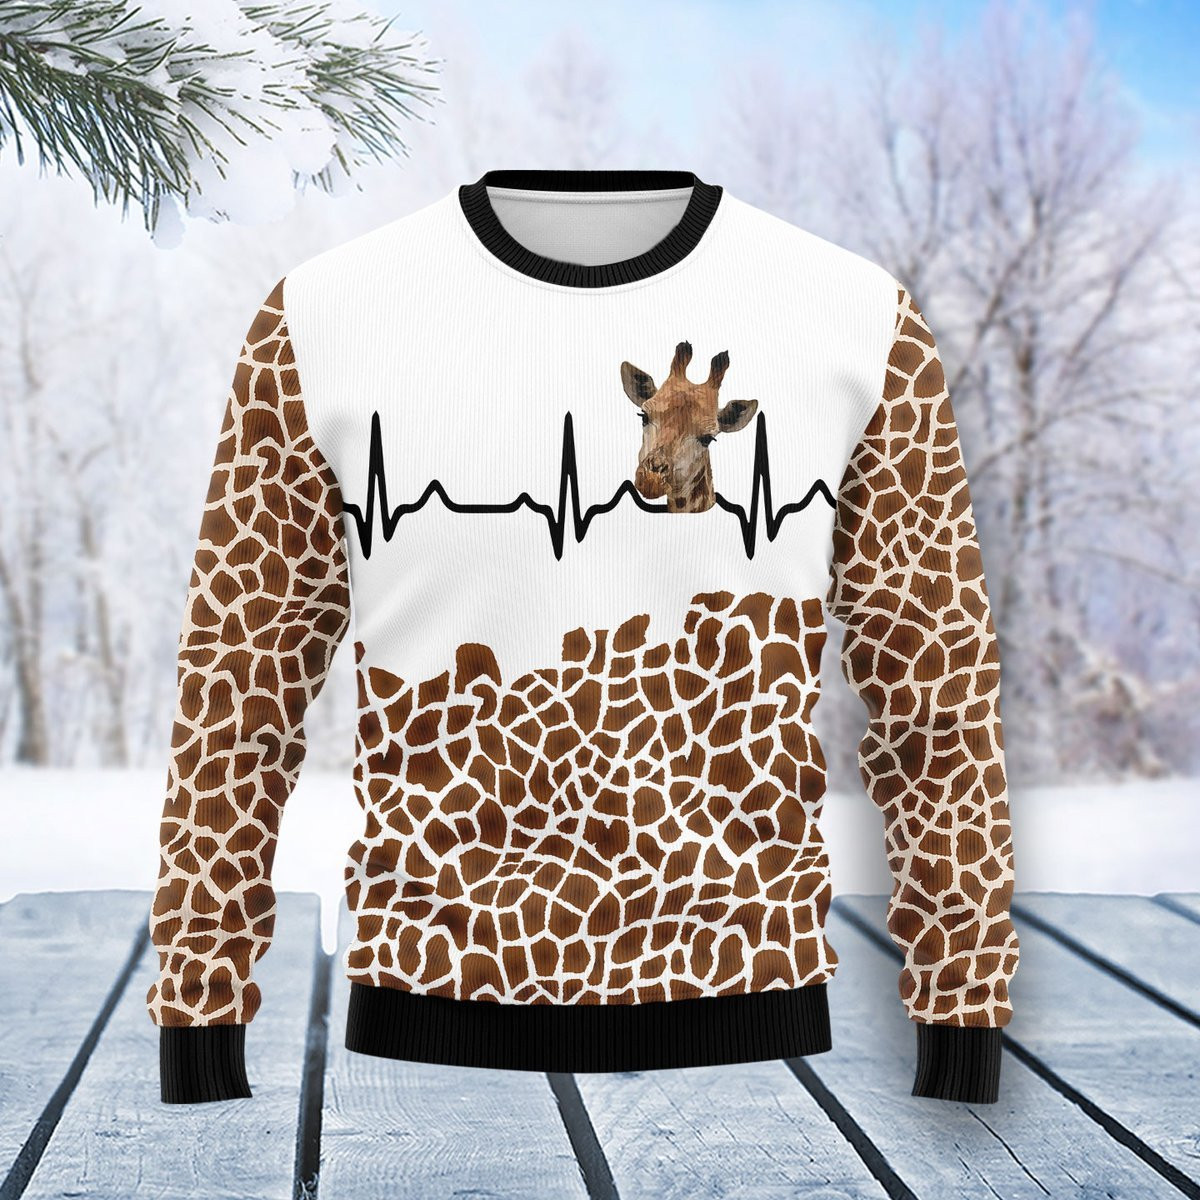 Giraffe Heart Ugly Christmas Sweater Ugly Sweater For Men Women